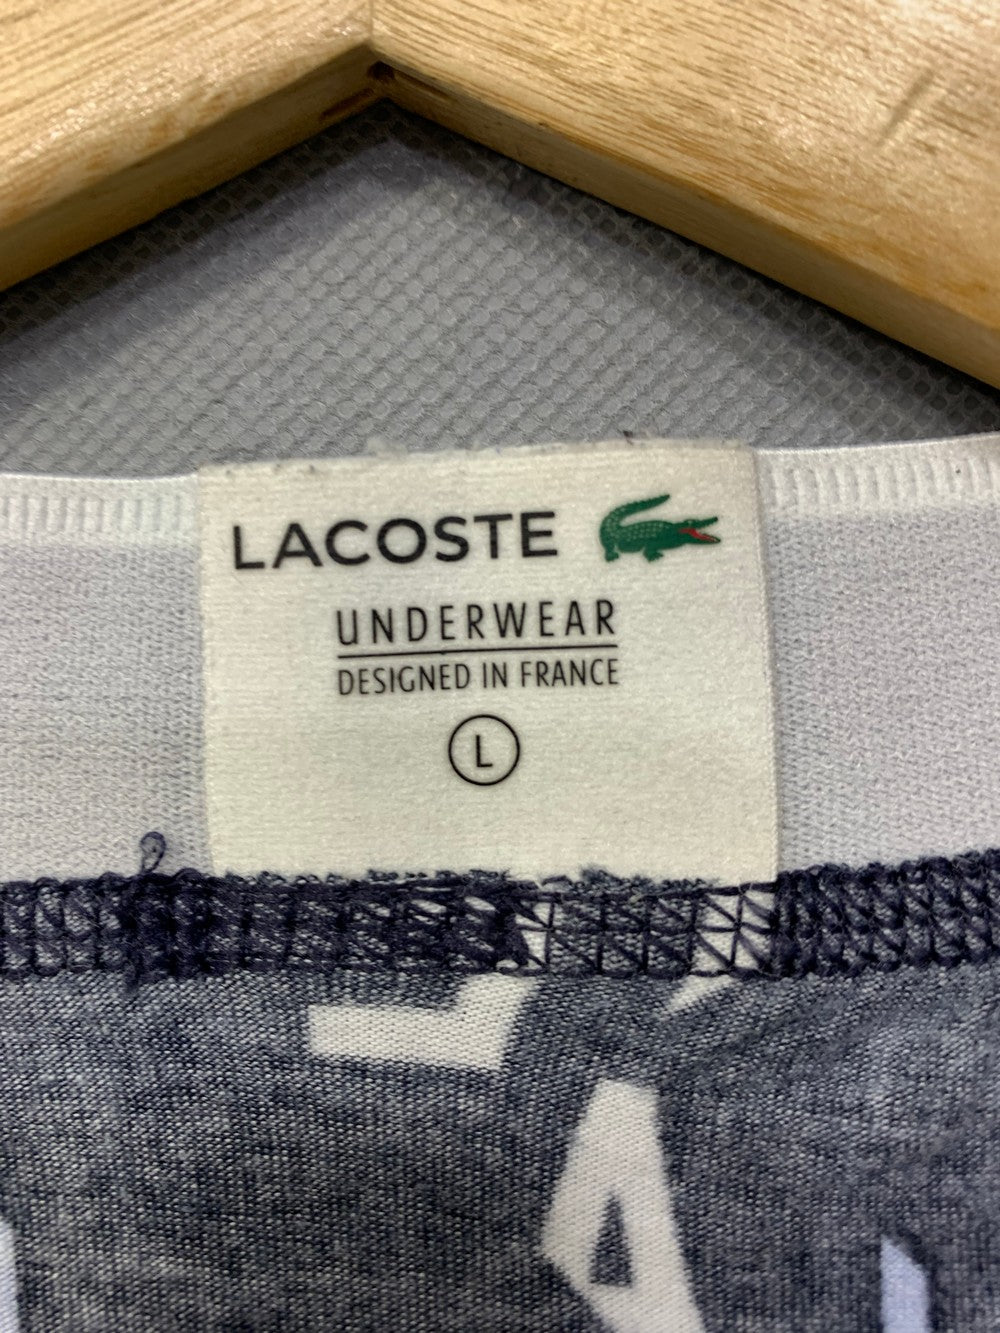 Lacoste Original Branded Boxer Underwear For Men